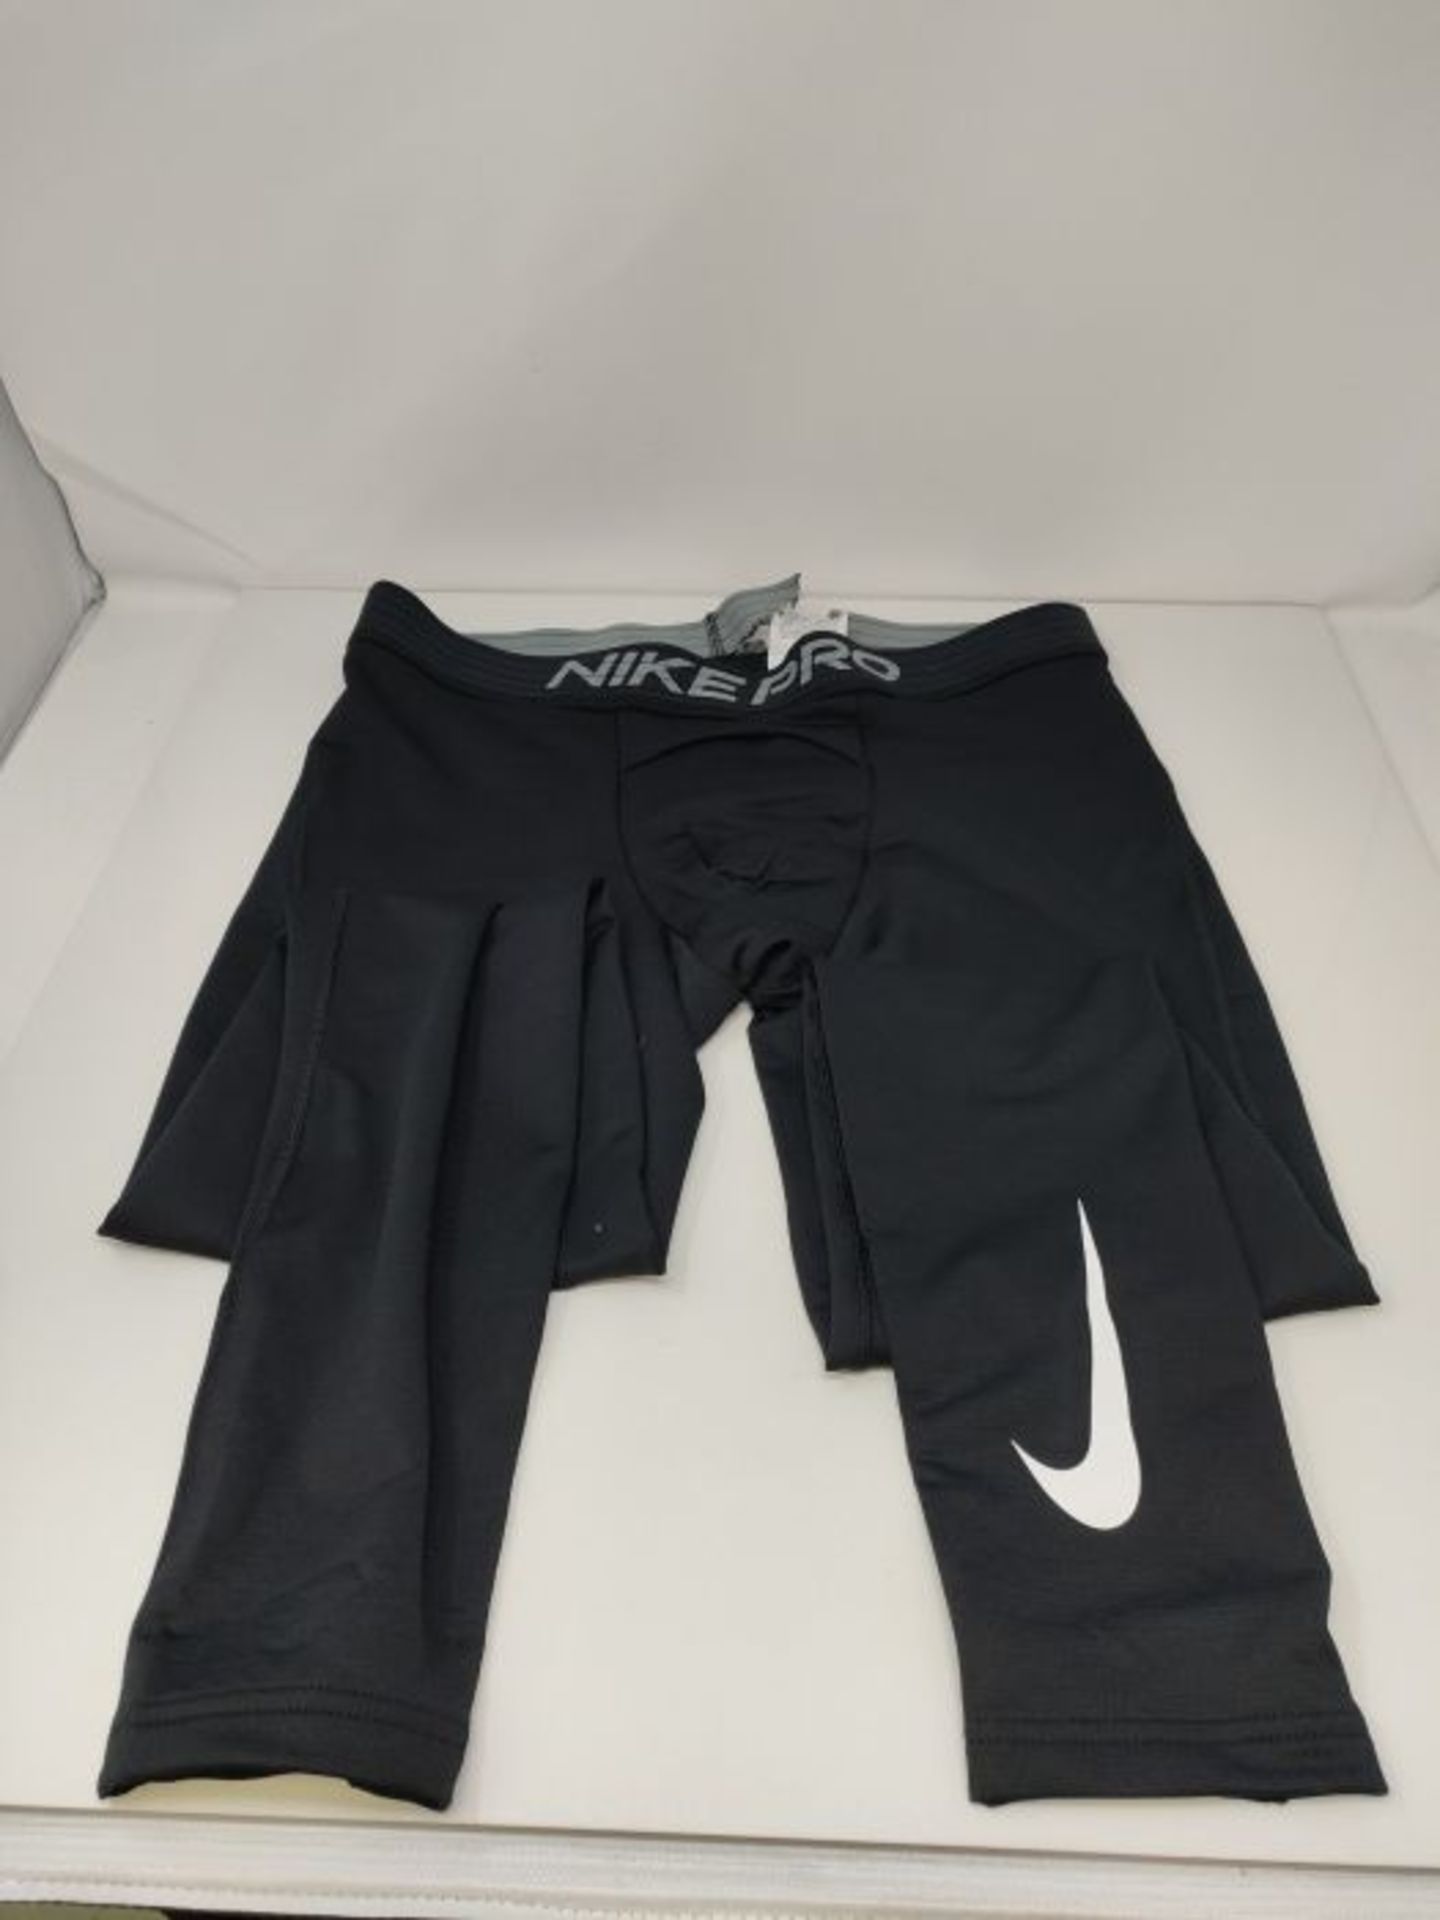 [CRACKED] Nike Men's Pro Warm Tights, Black/White, XL - Image 2 of 3